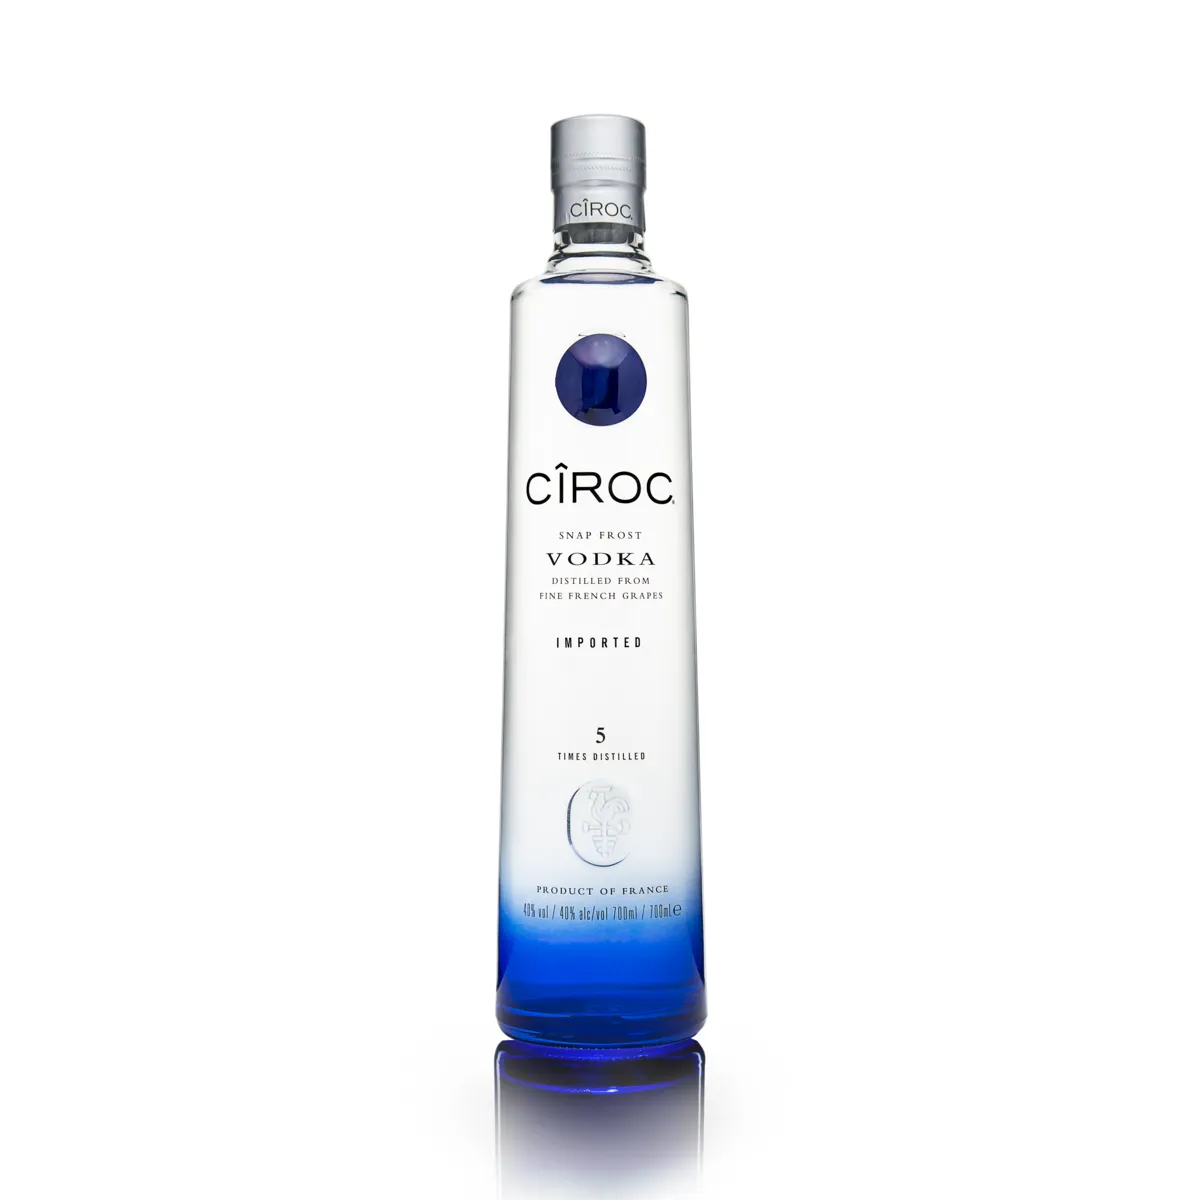 vodka ciroc